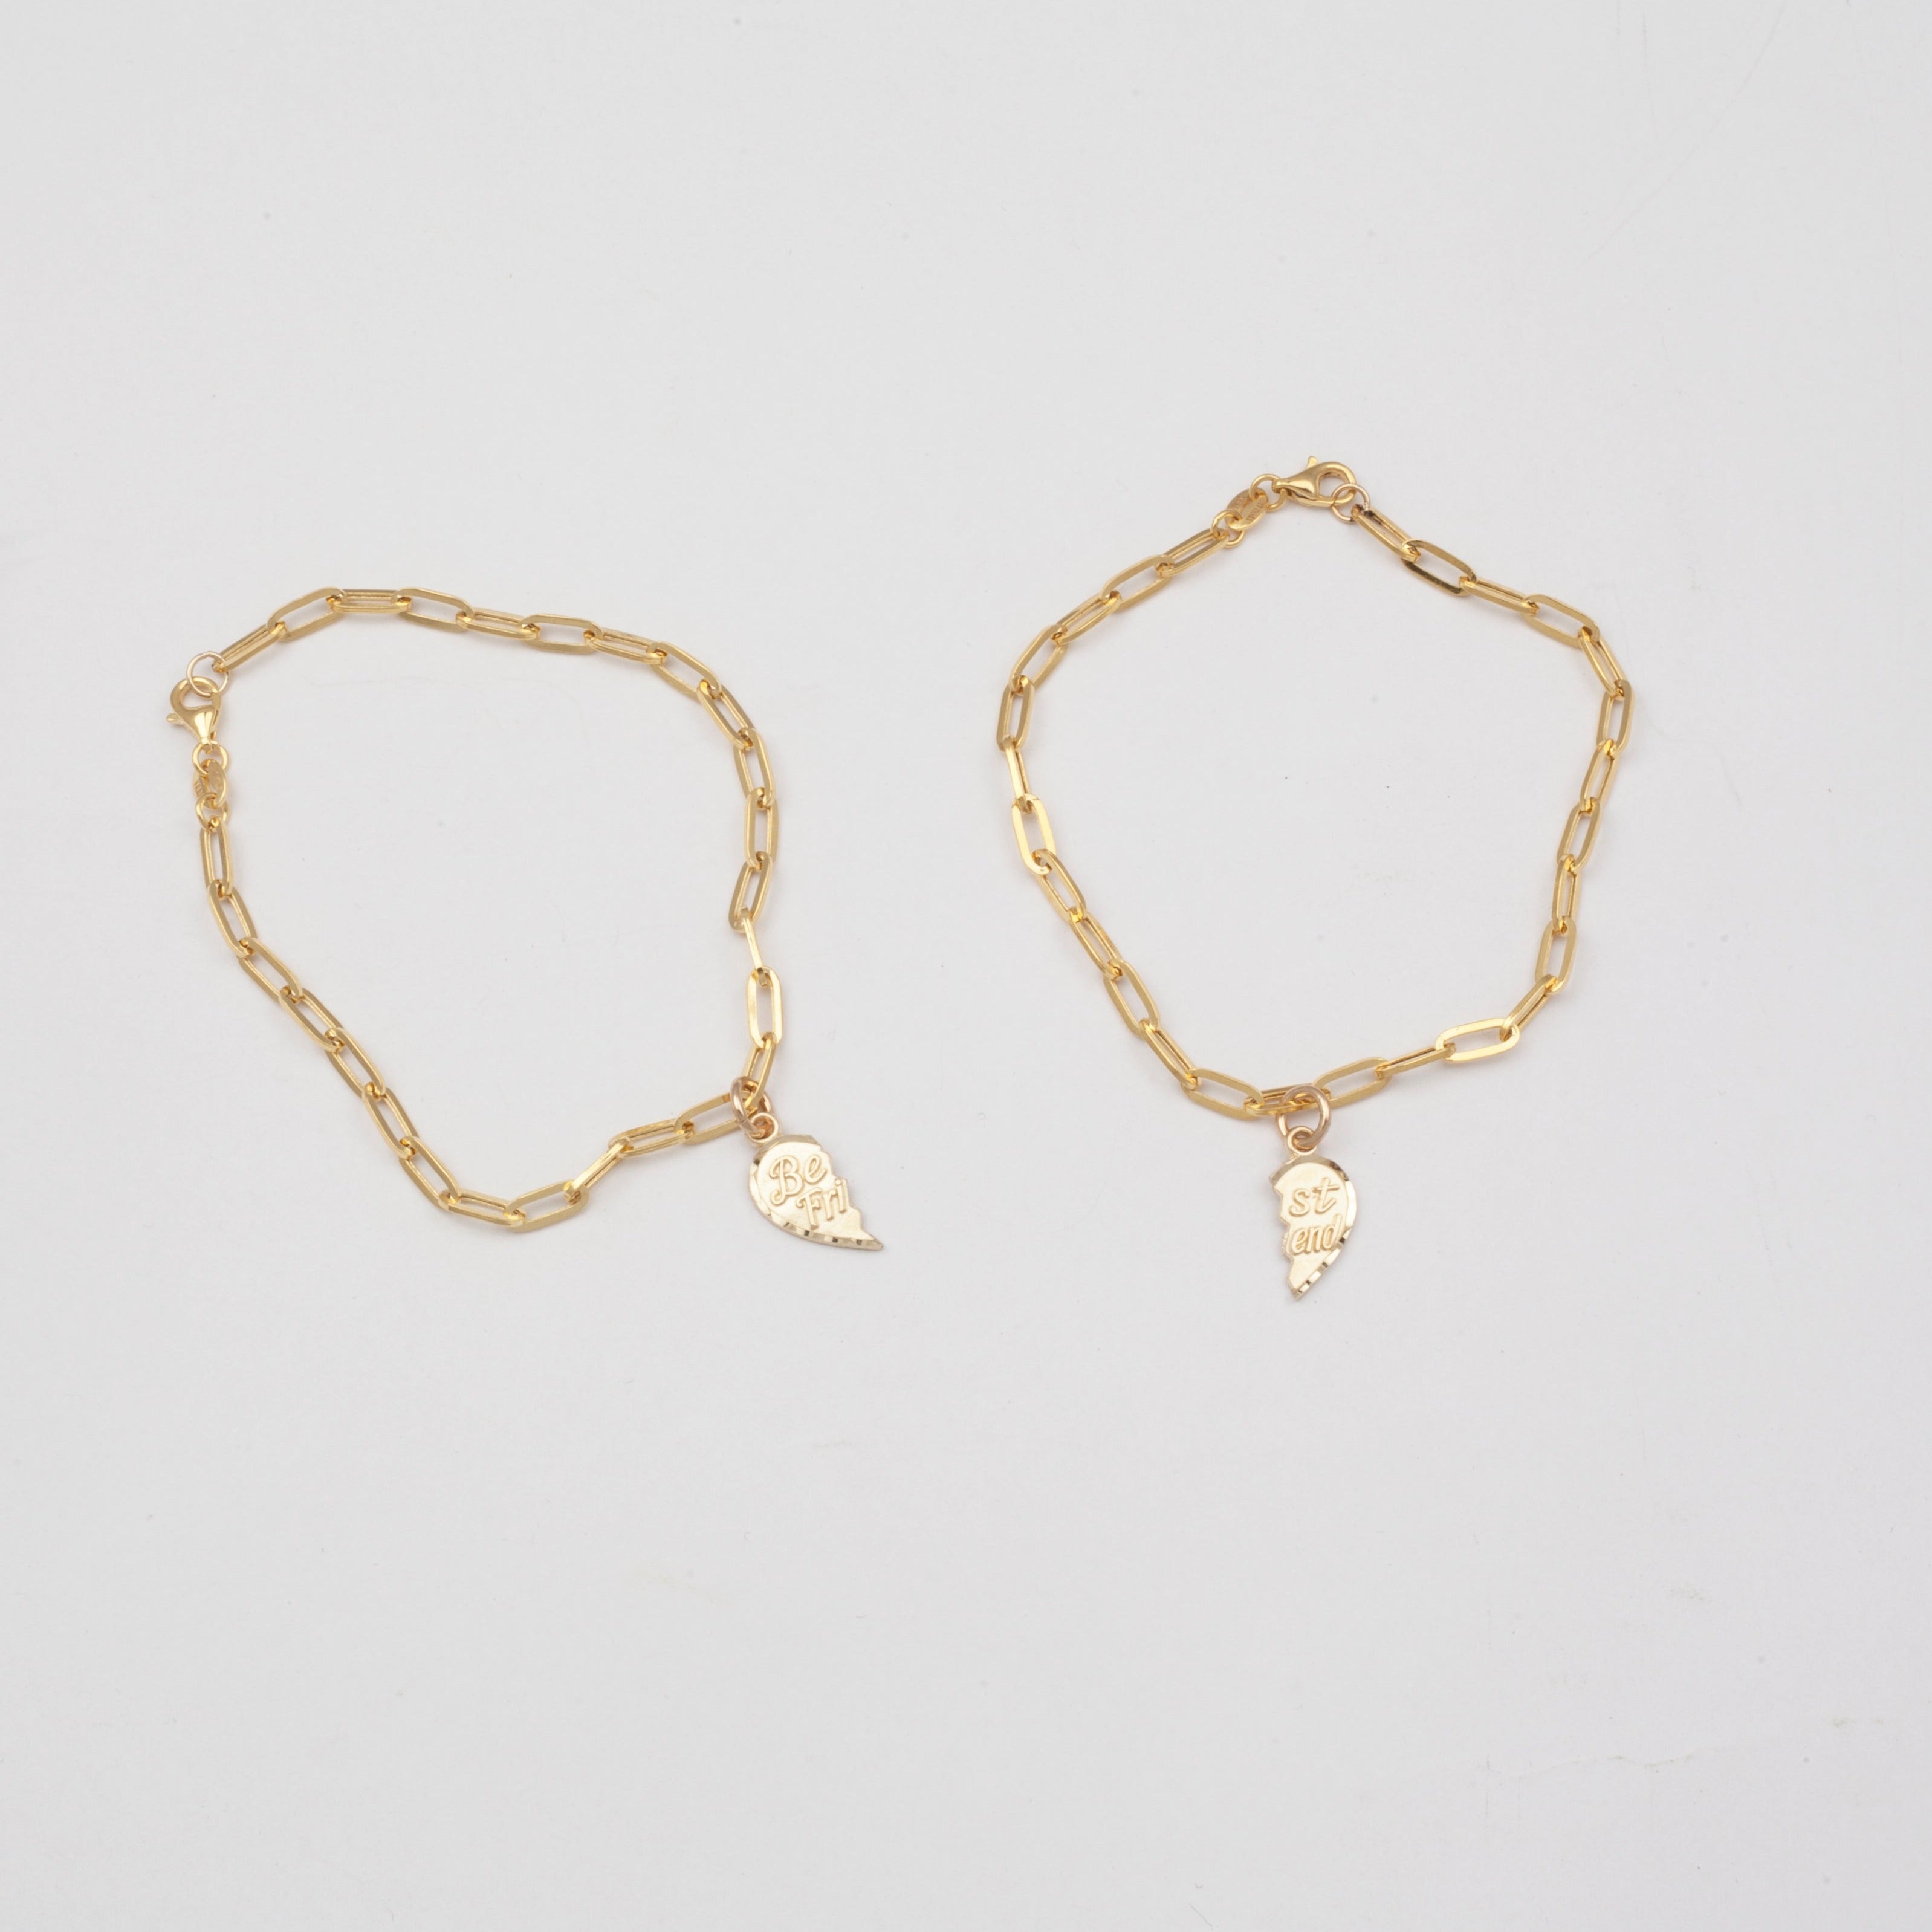 10k Solid Yellow Gold Best Friends puzzle heart pendants on paperclip chain bracelets 